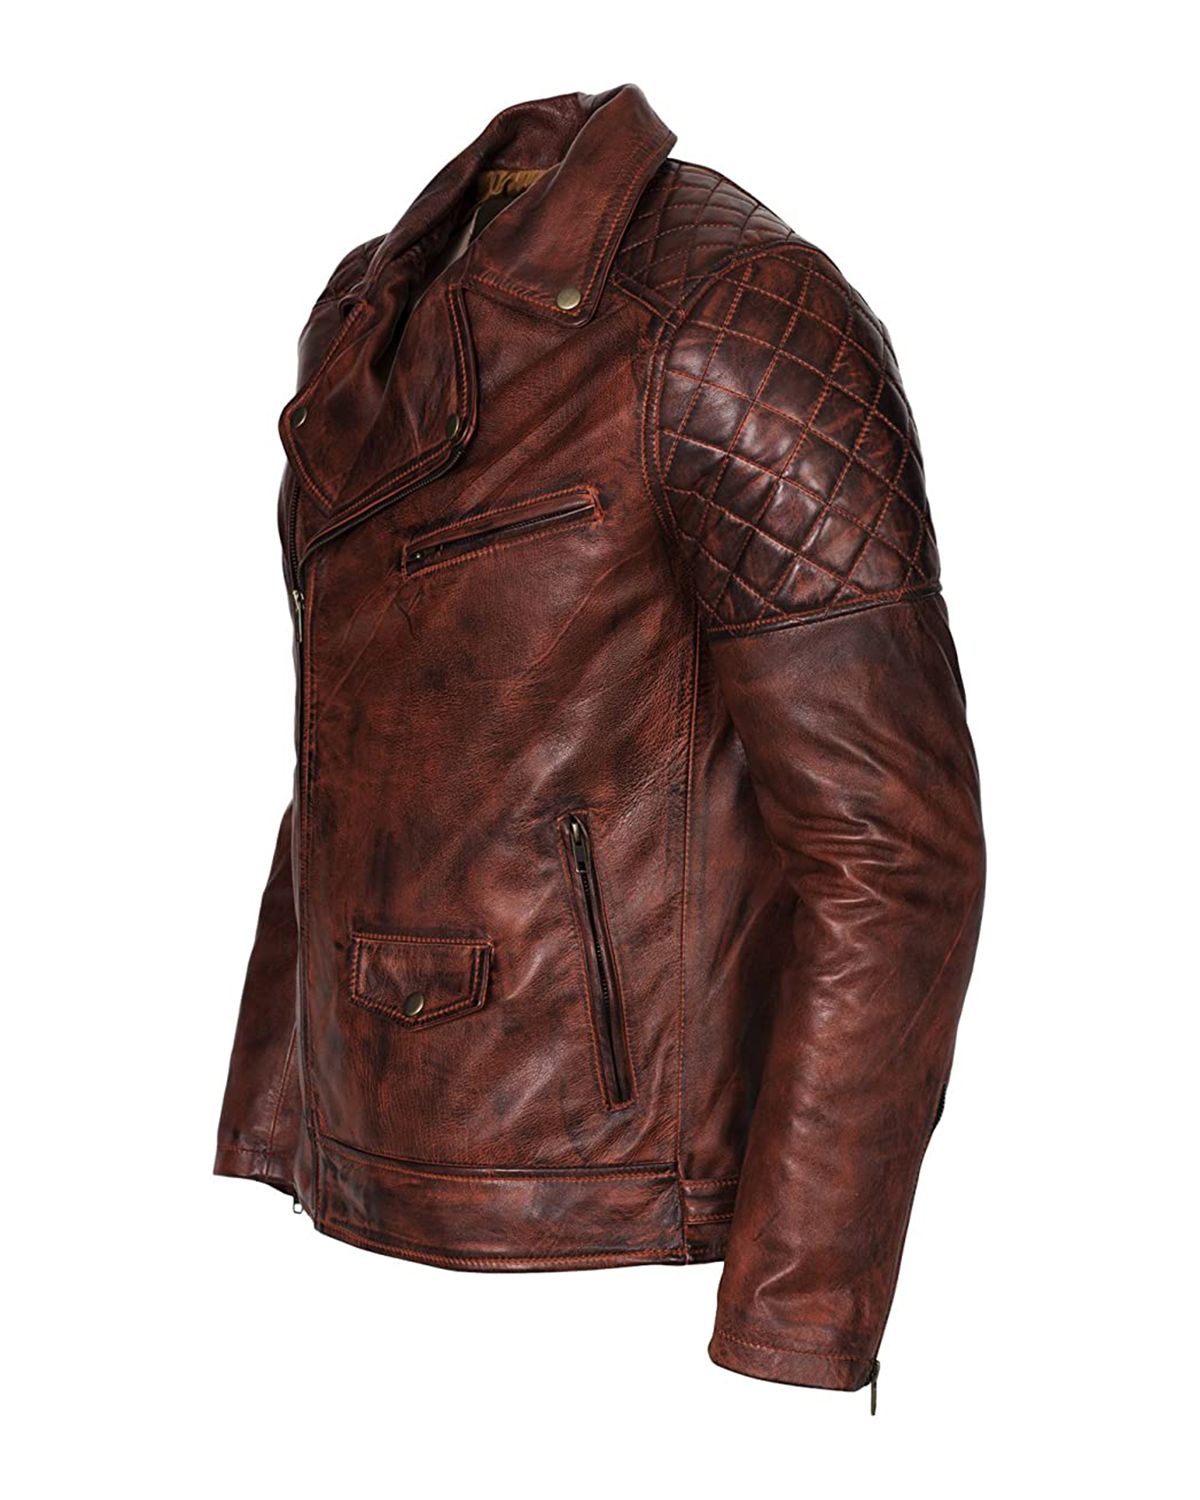 Bikers Jacket in Brown Leather For Mens | Elite Jacket